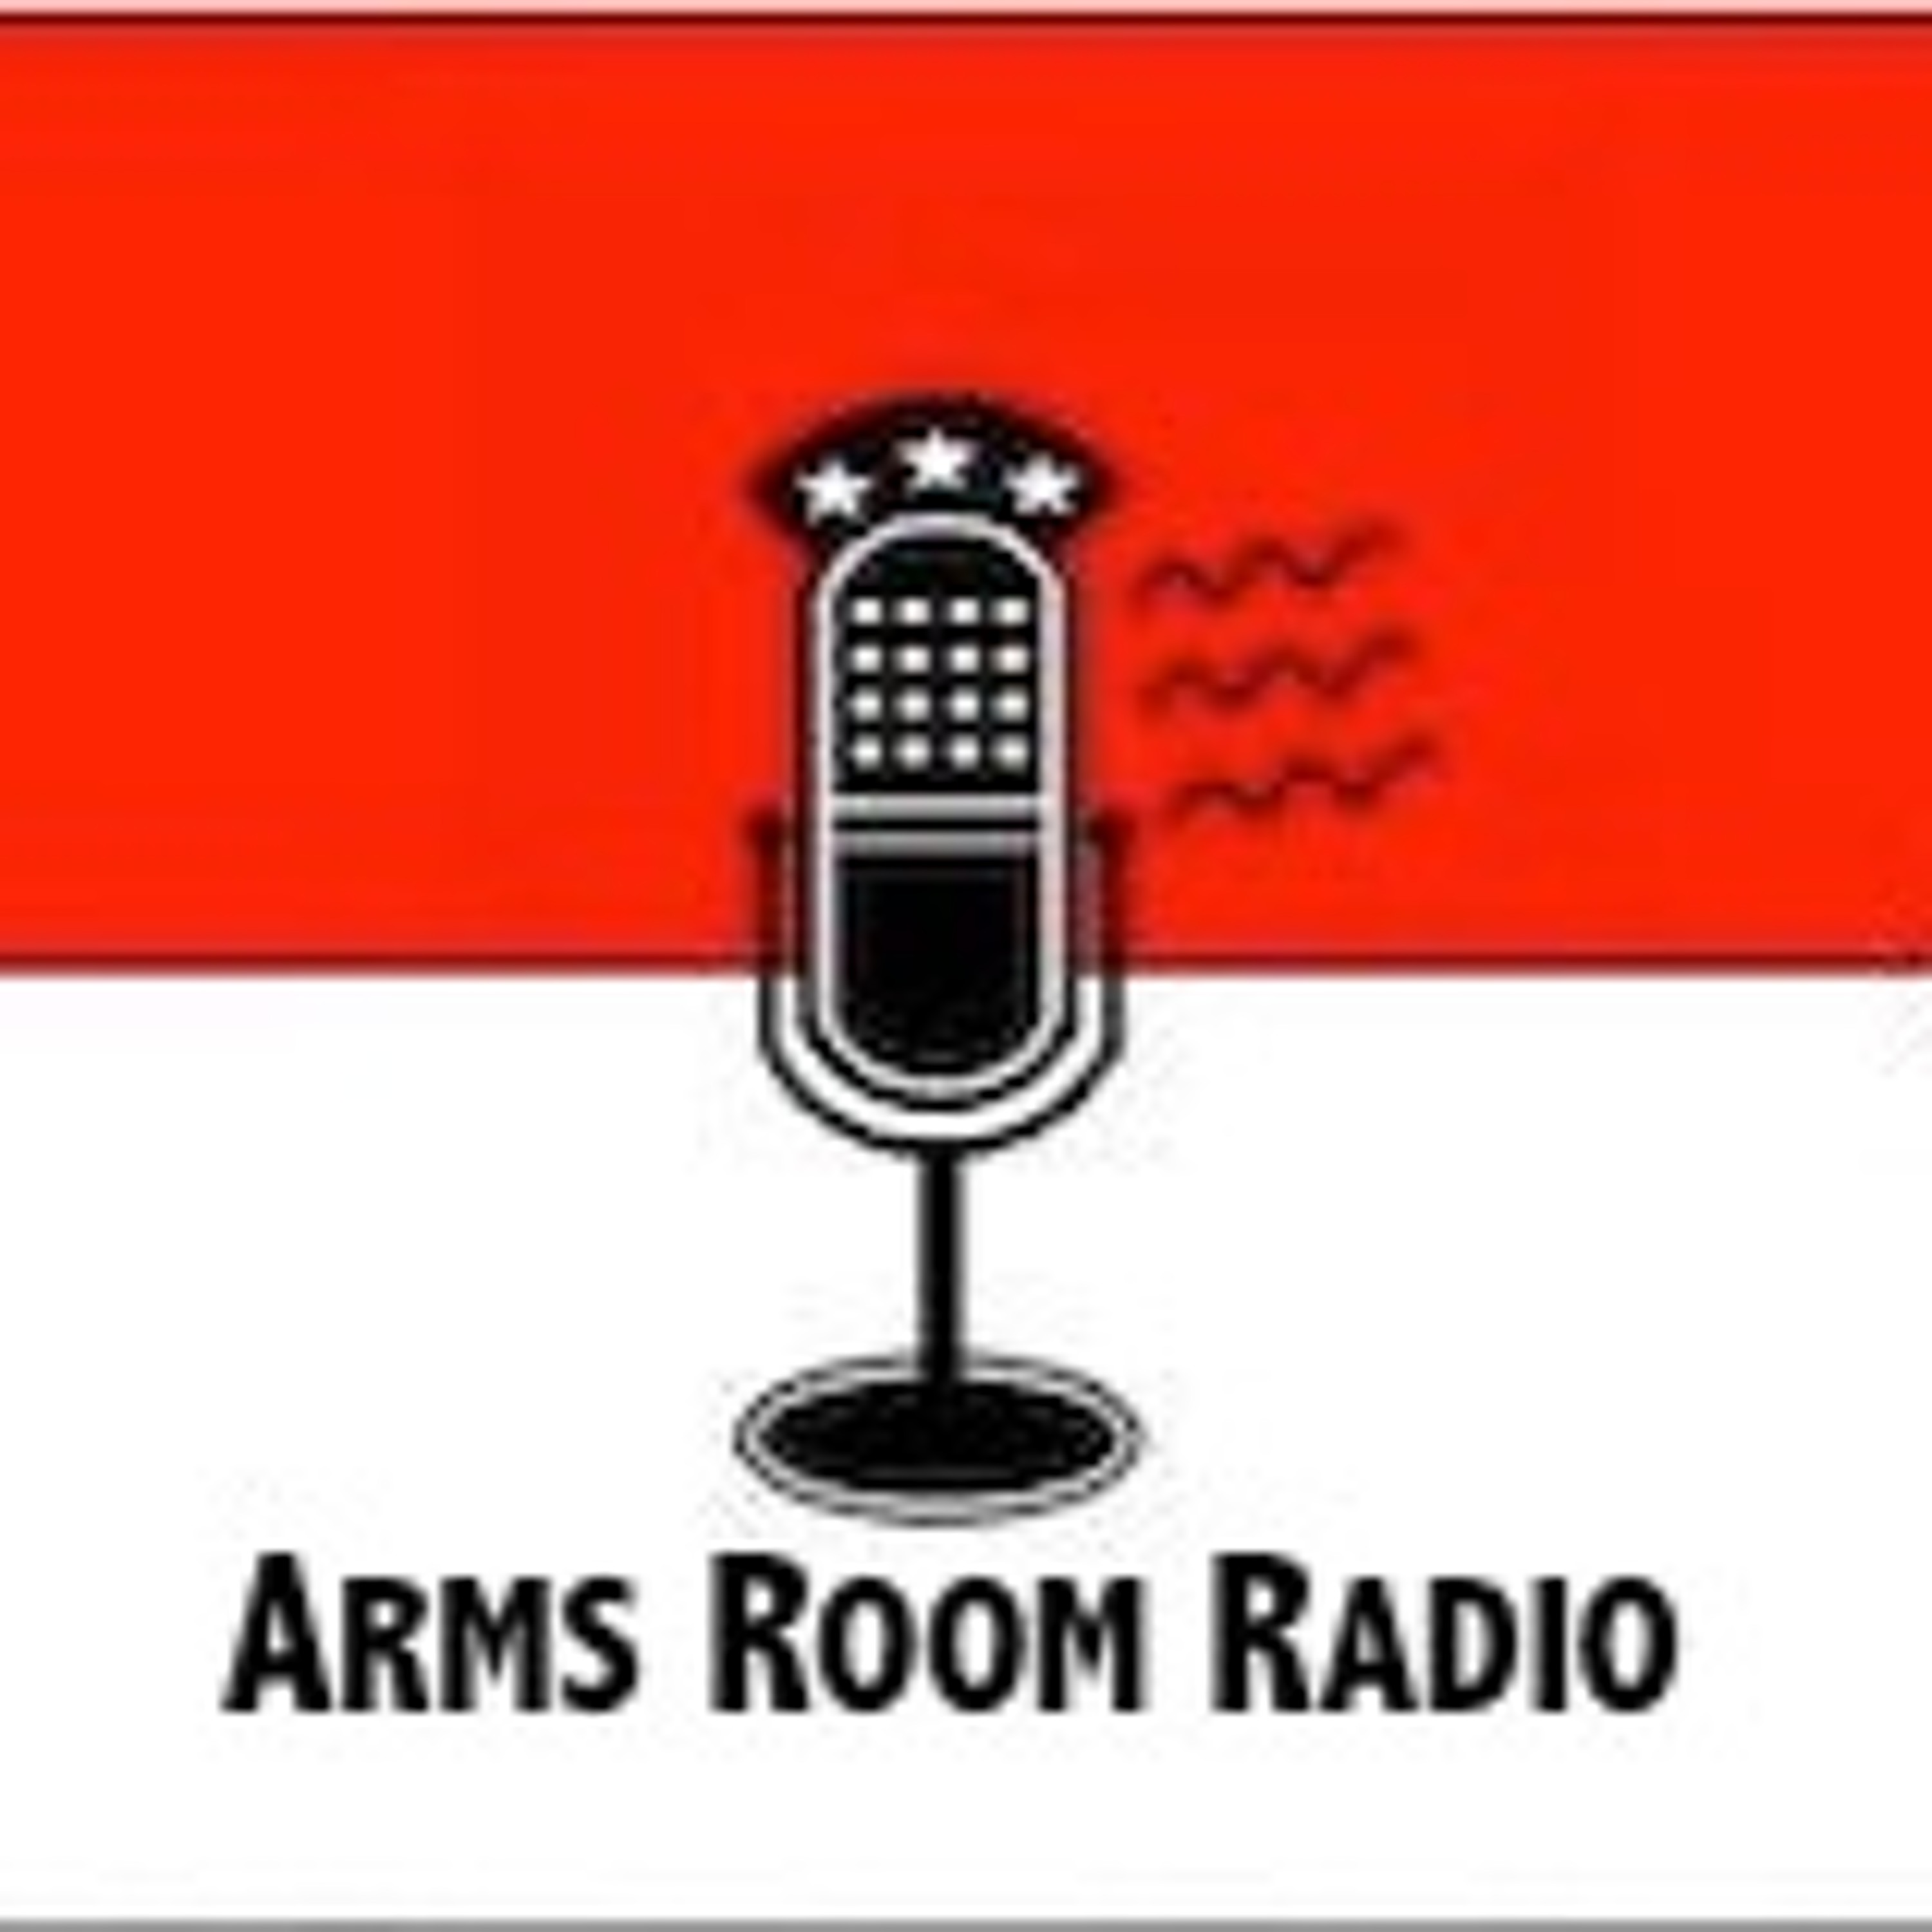 ArmsRoomRadio 09.19.20 Todd Fossey and Mark Walters